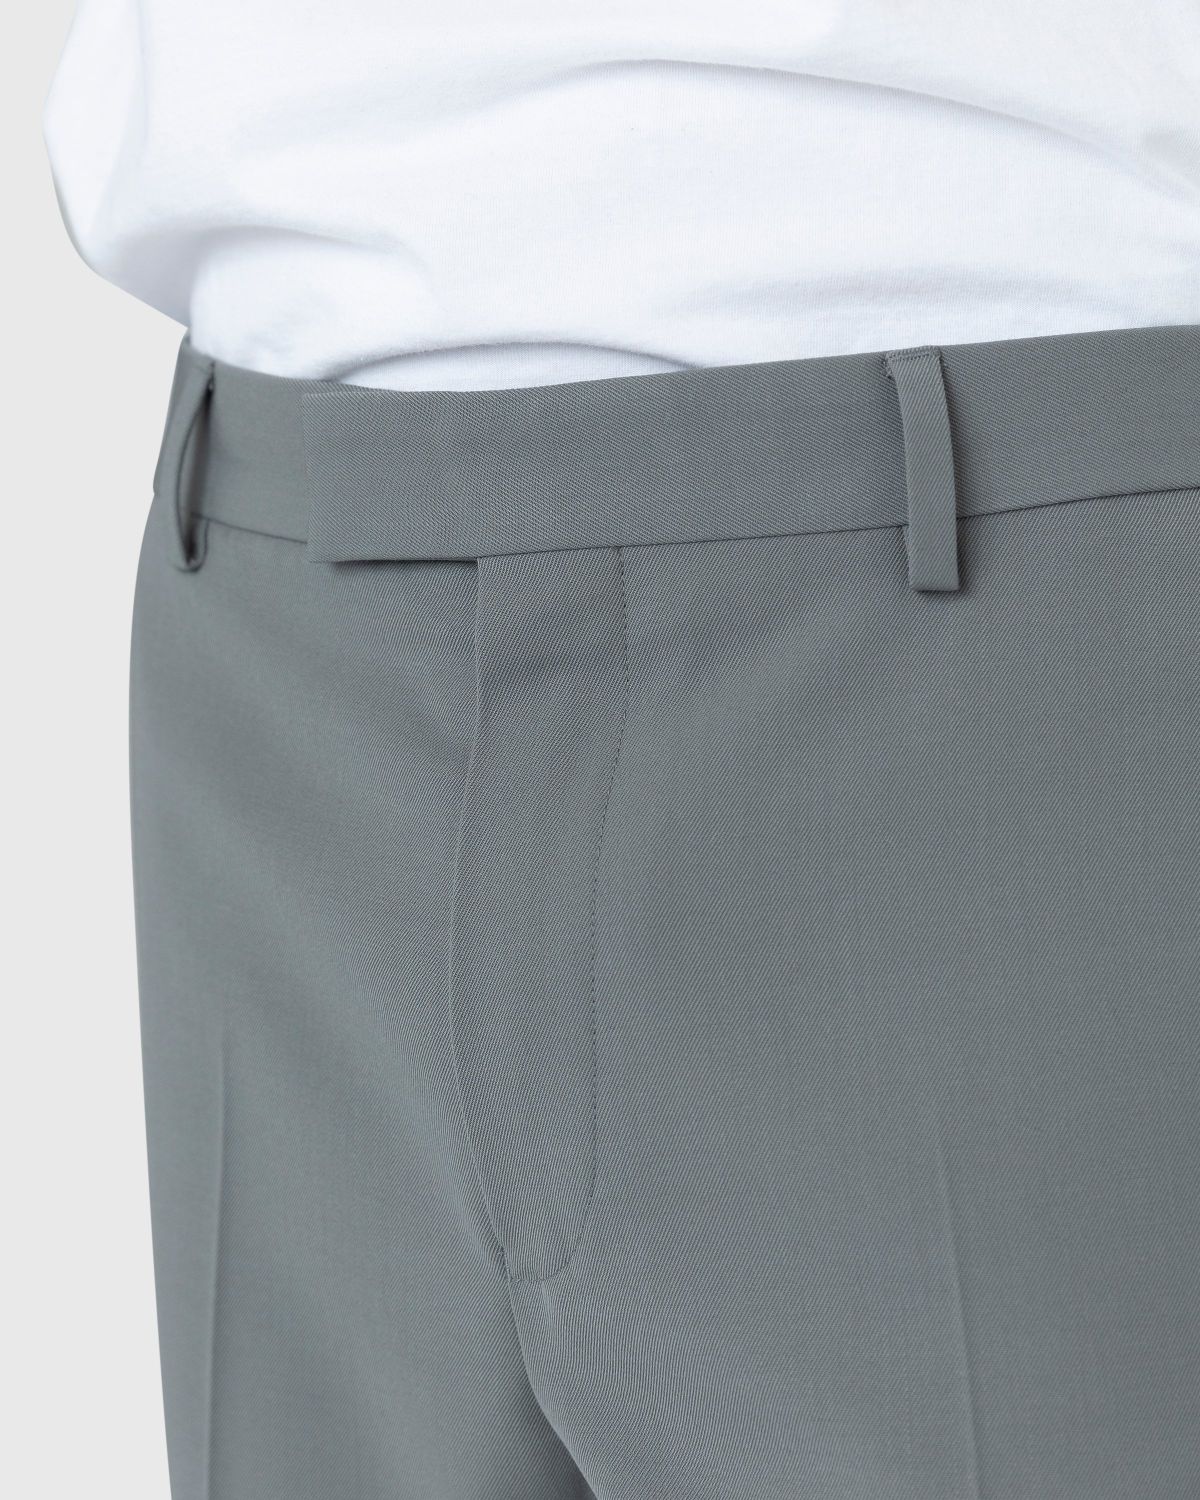 Dries van Noten – Pinnet Long Pants Grey - Trousers - Grey - Image 5